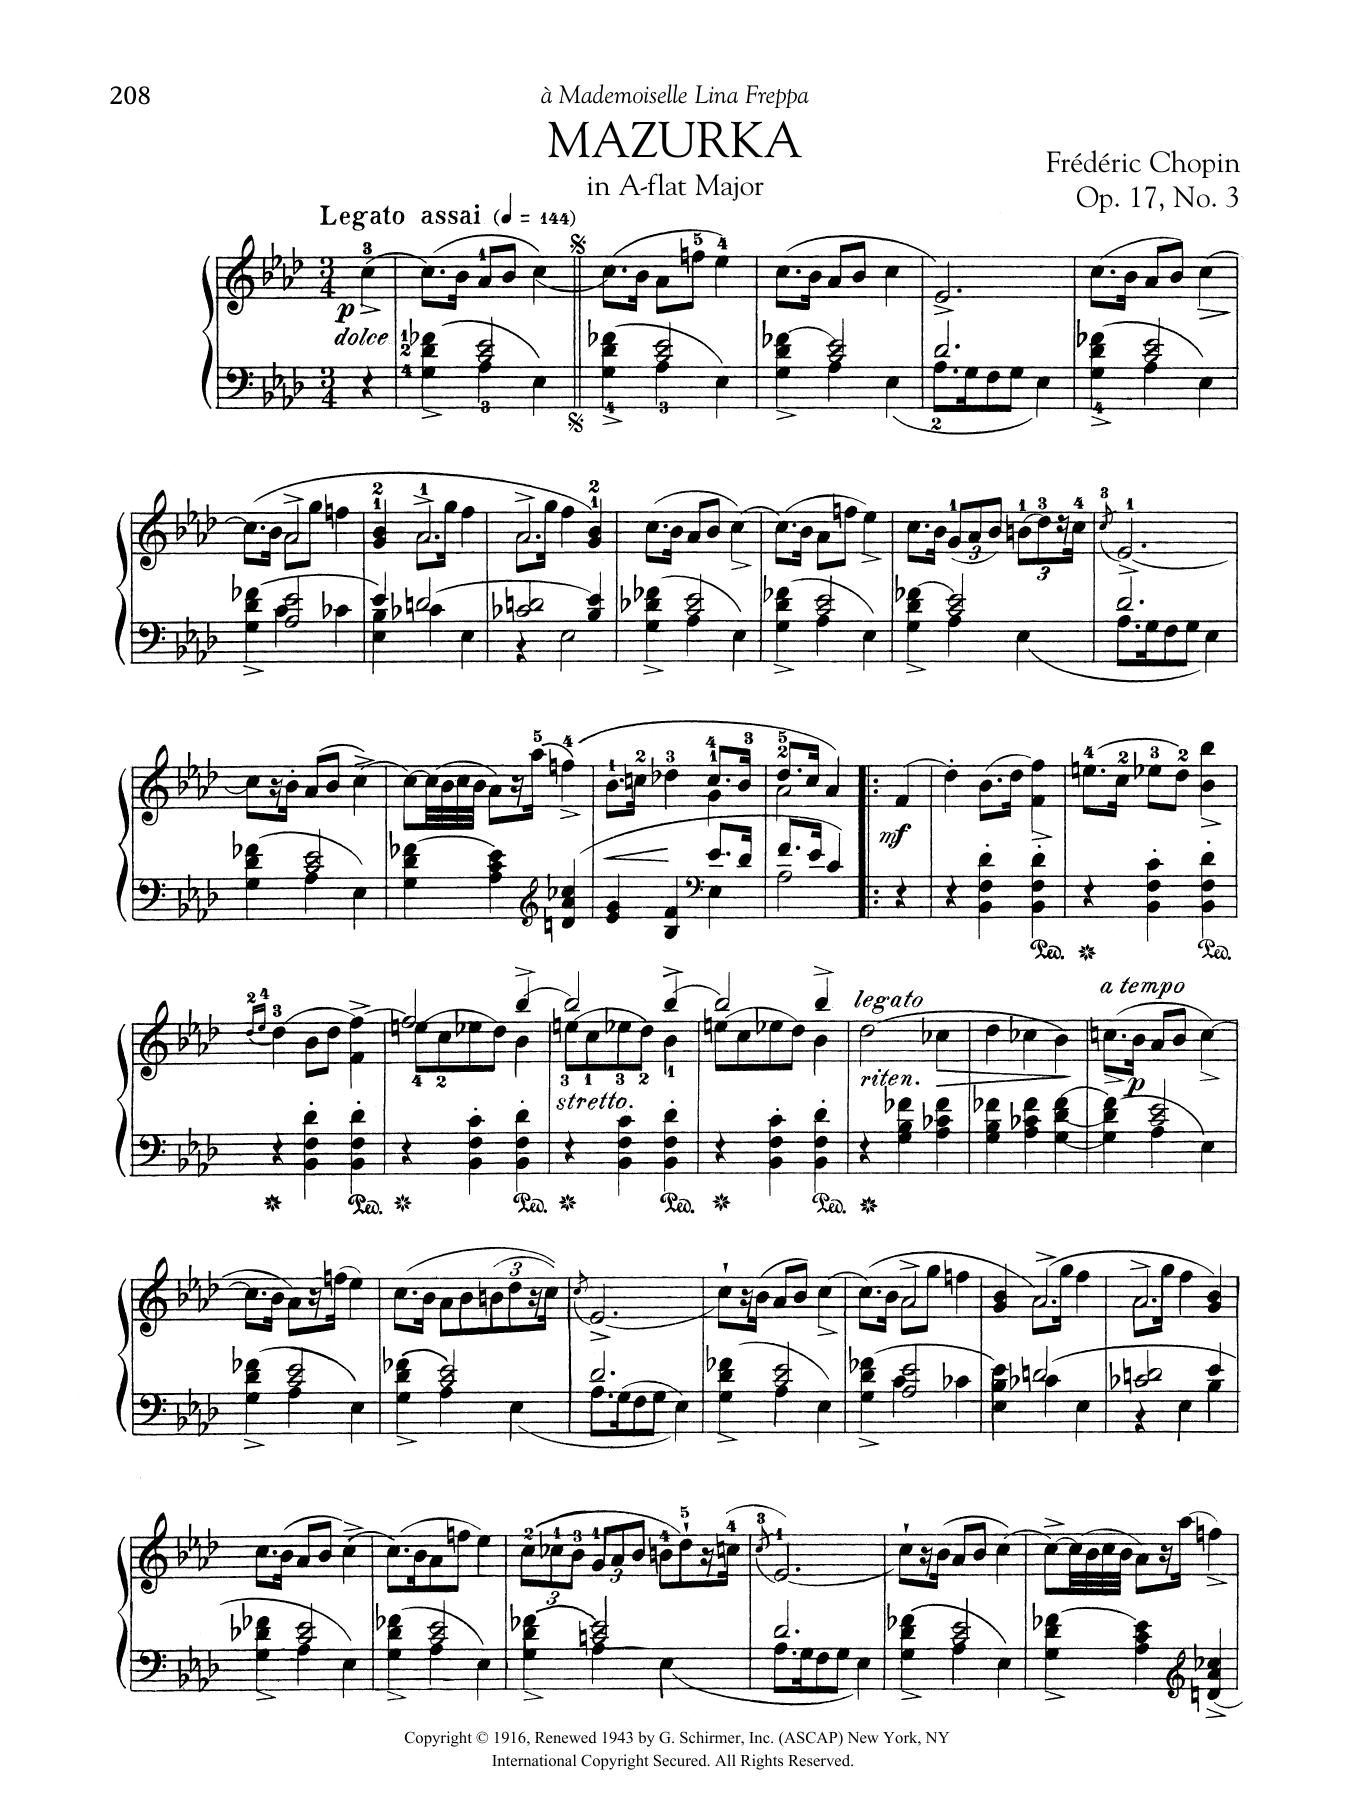 Download Frederic Chopin Mazurka in A-flat Major, Op. 17, No. 3 Sheet Music